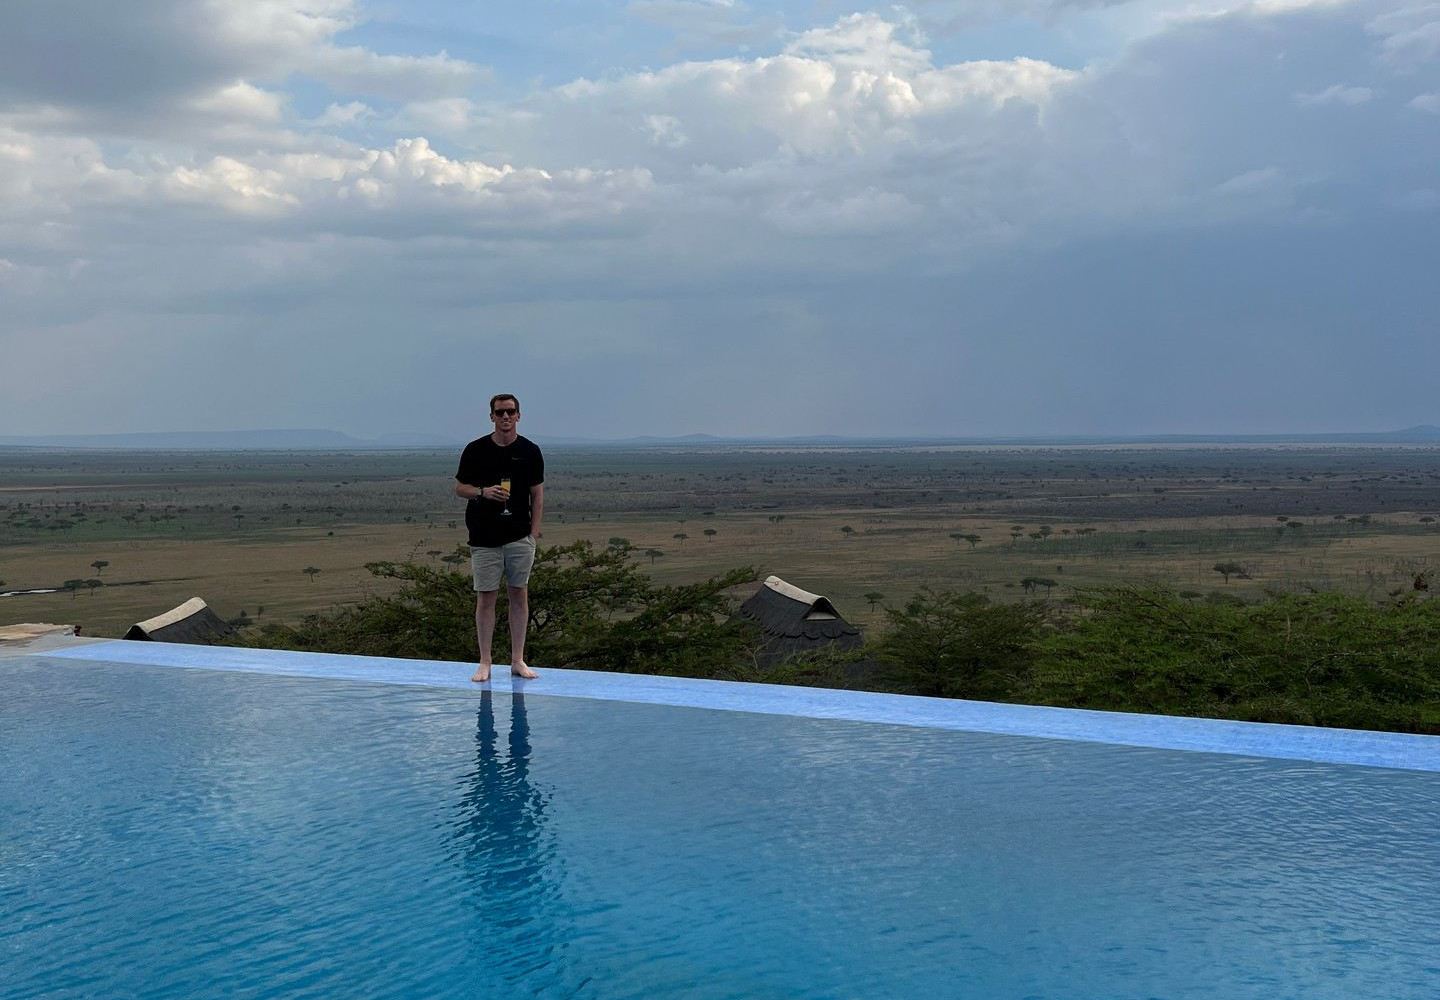 David Simpson at Lahia Lodge swimming pool in Tanzania. The Serengeti